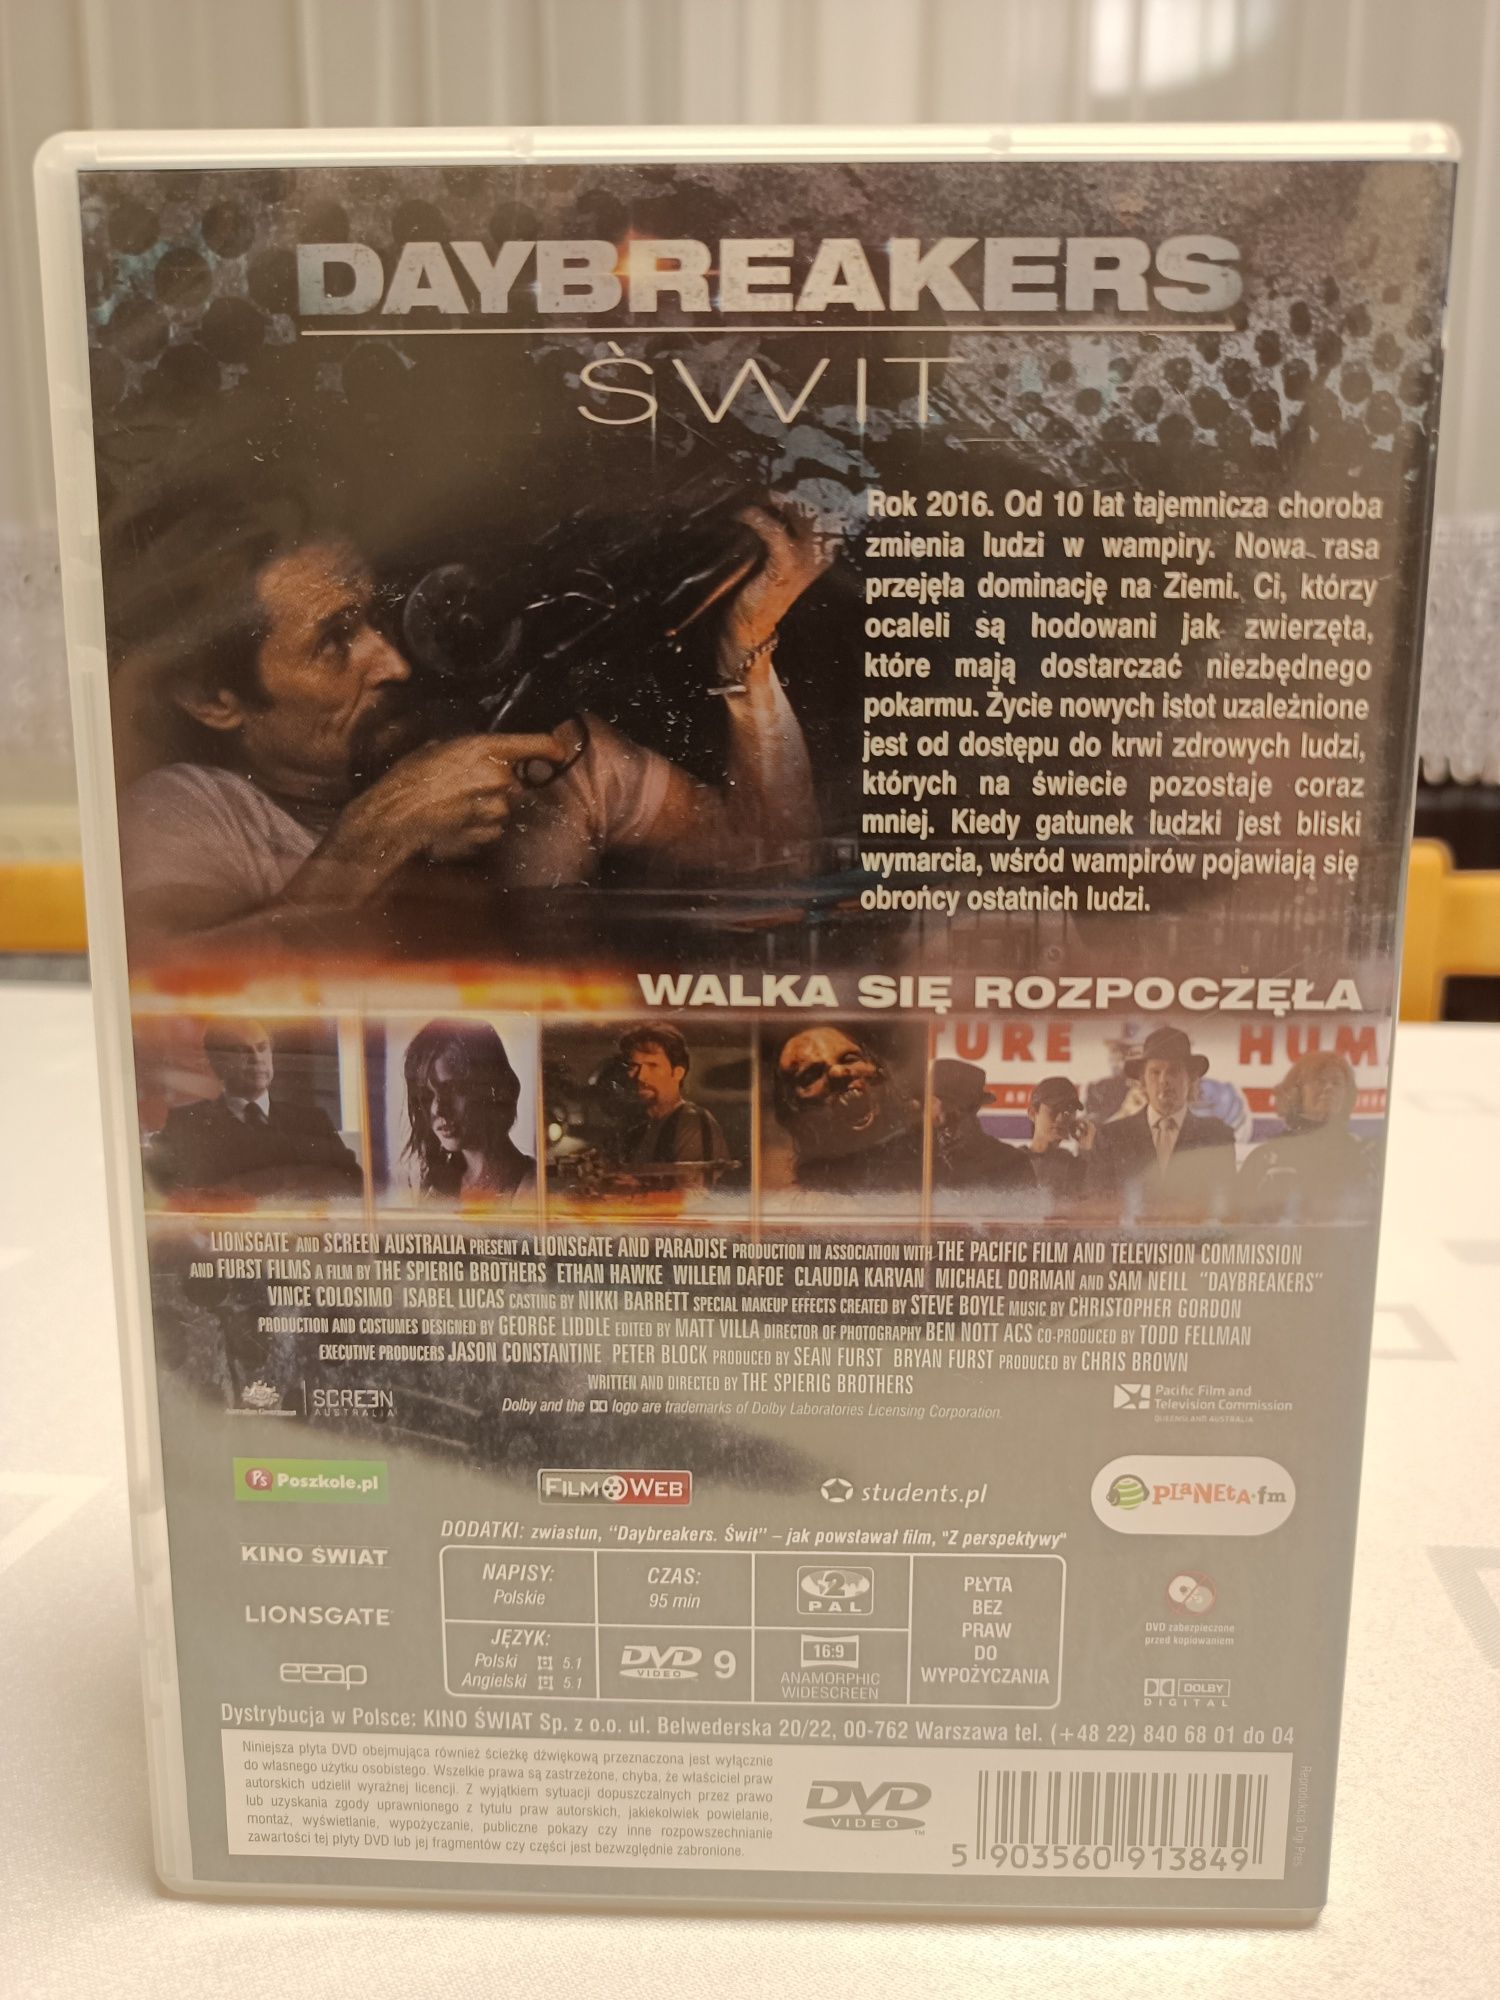 Daybreakers Świt film DVD lektor polski